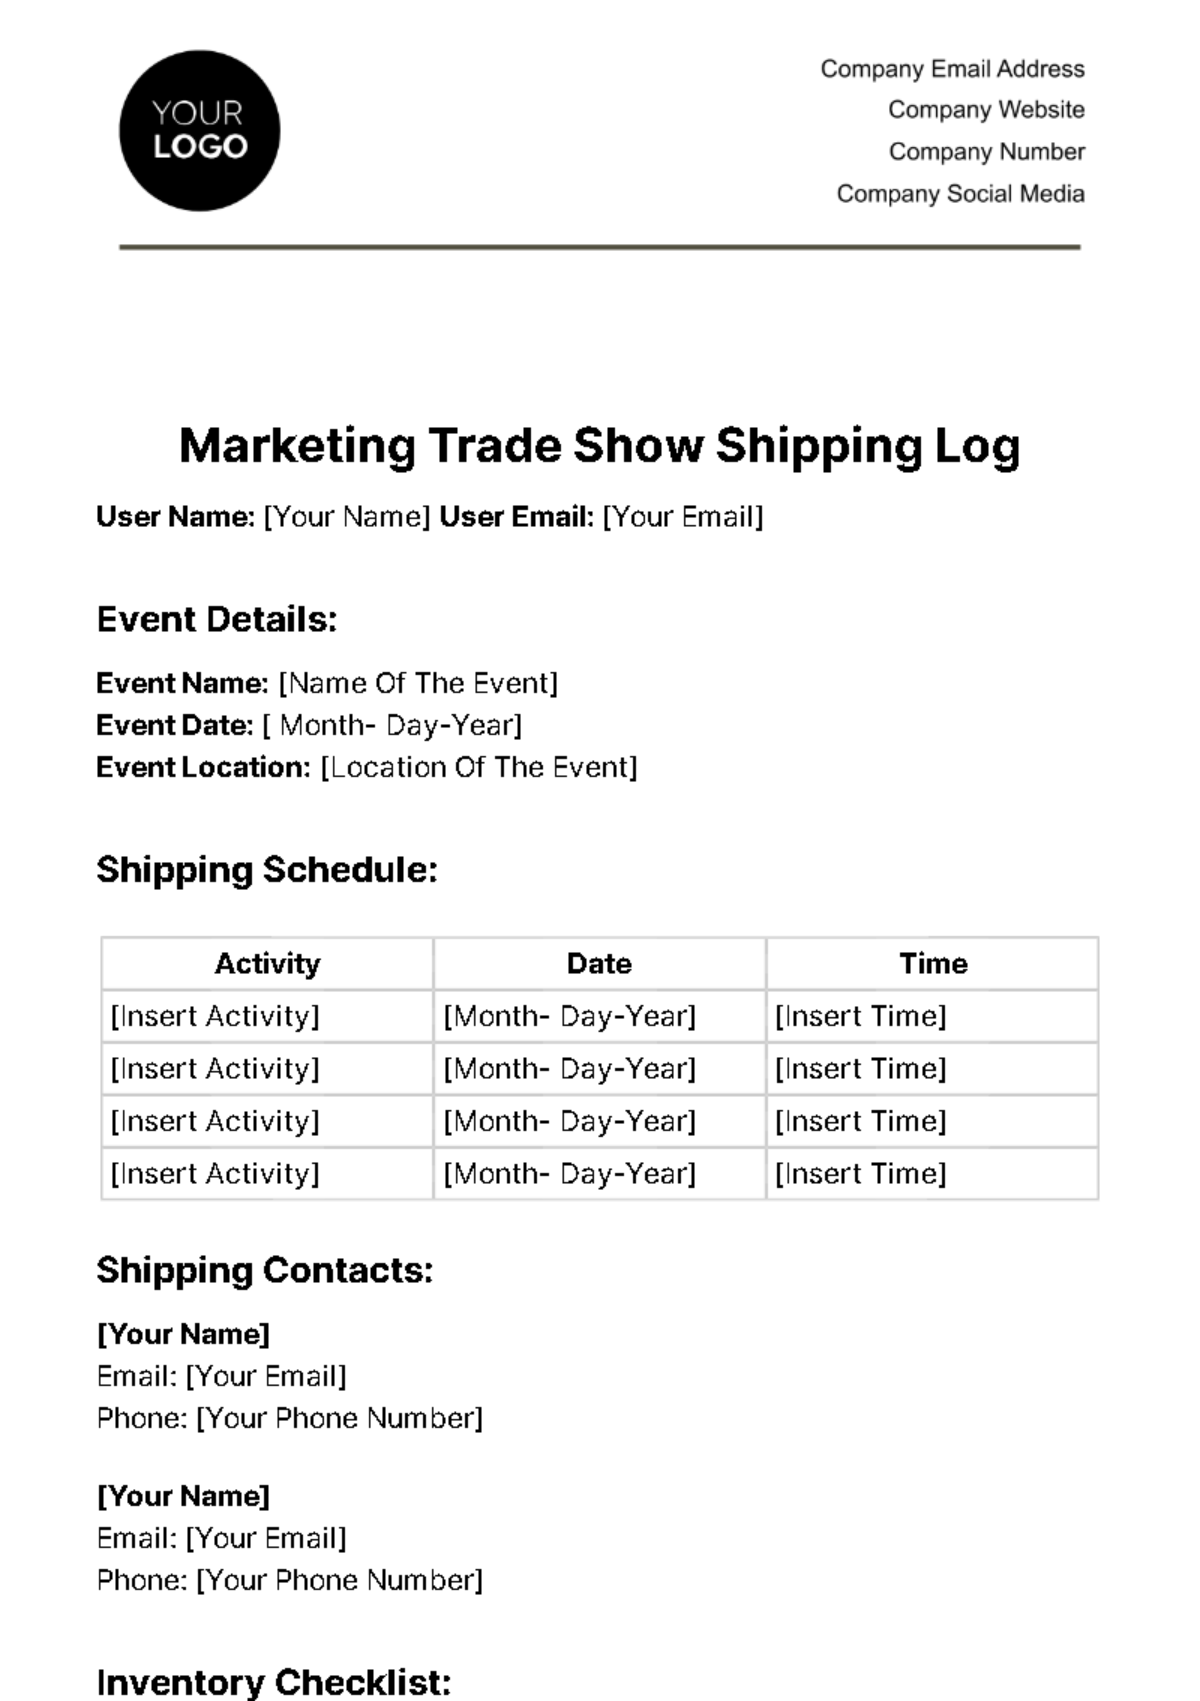 Marketing Trade Show Shipping Log Template